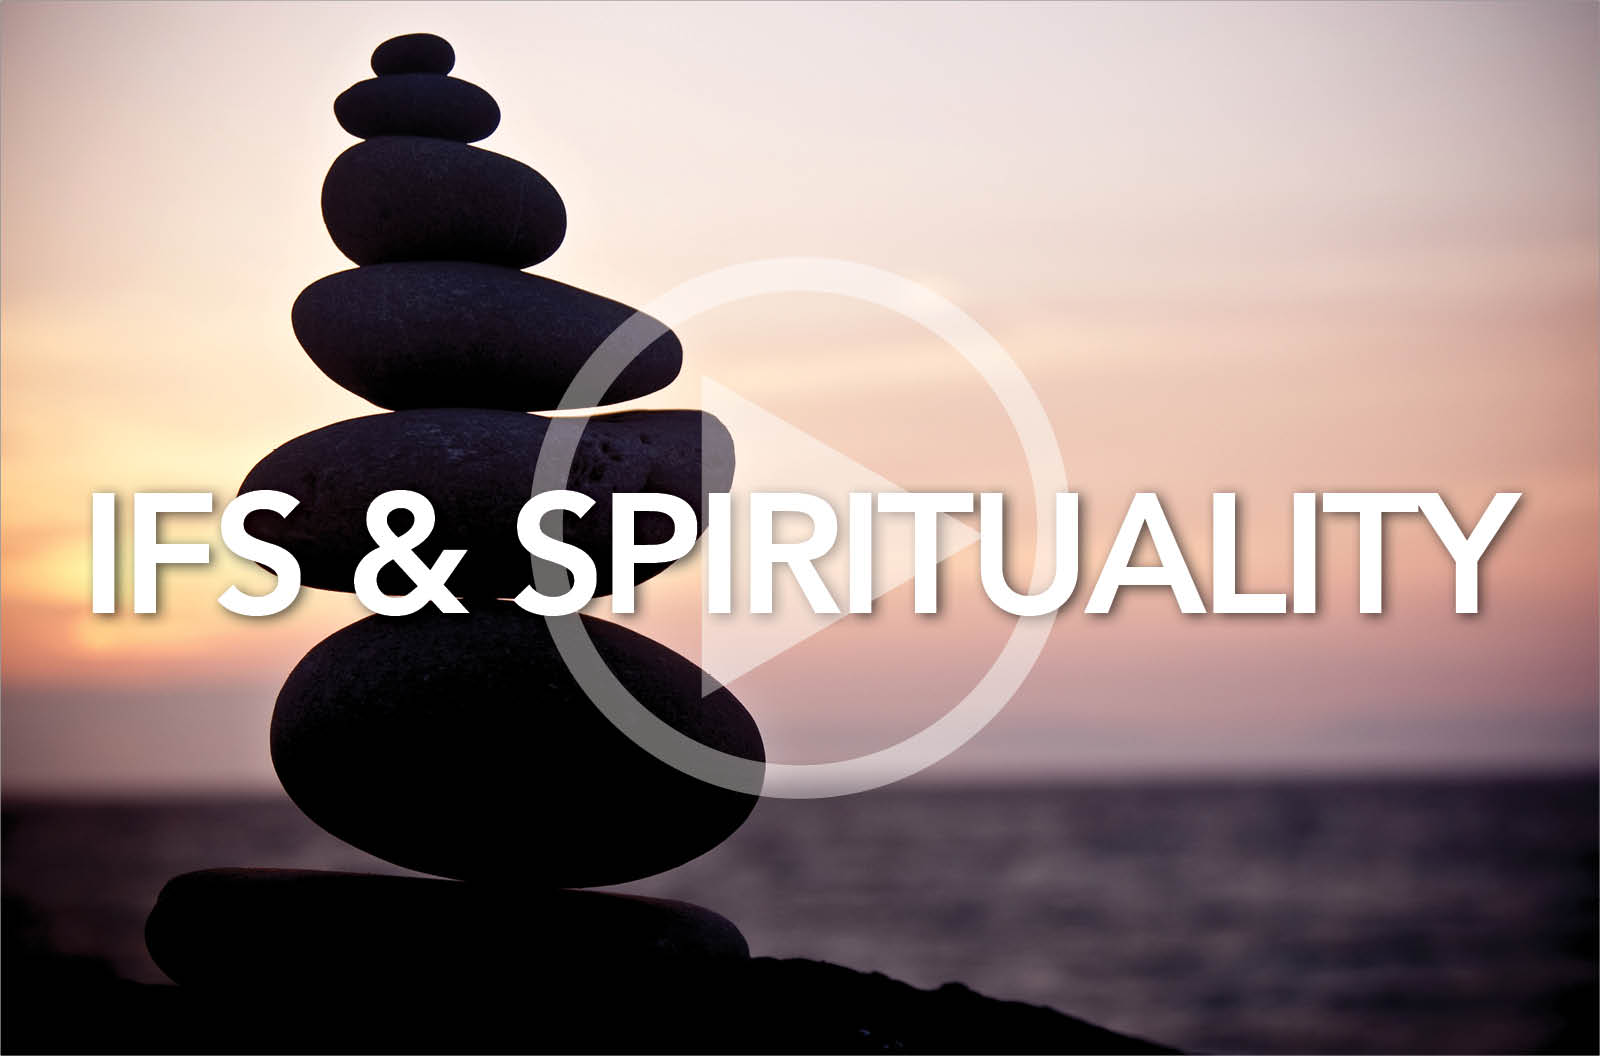 IFS and Spirituality